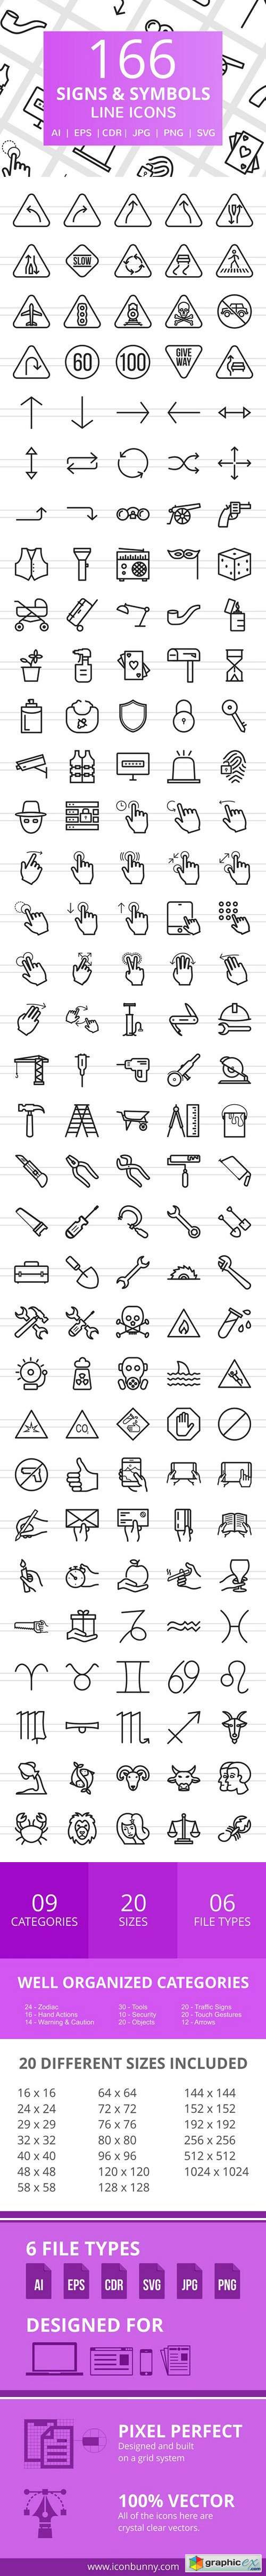 166 Signs & Symbols Line Icons